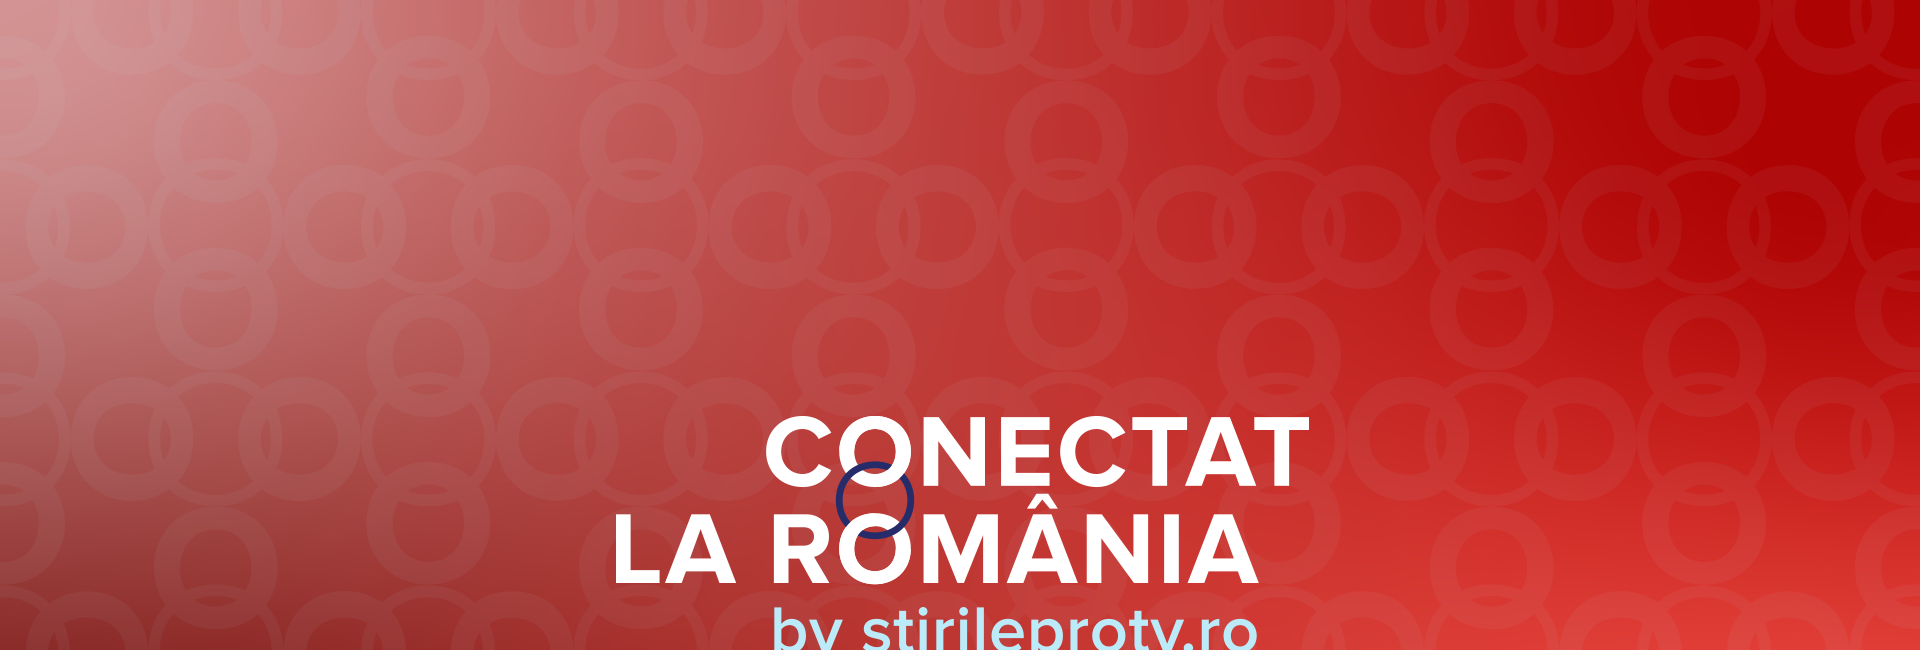 Conectat la România